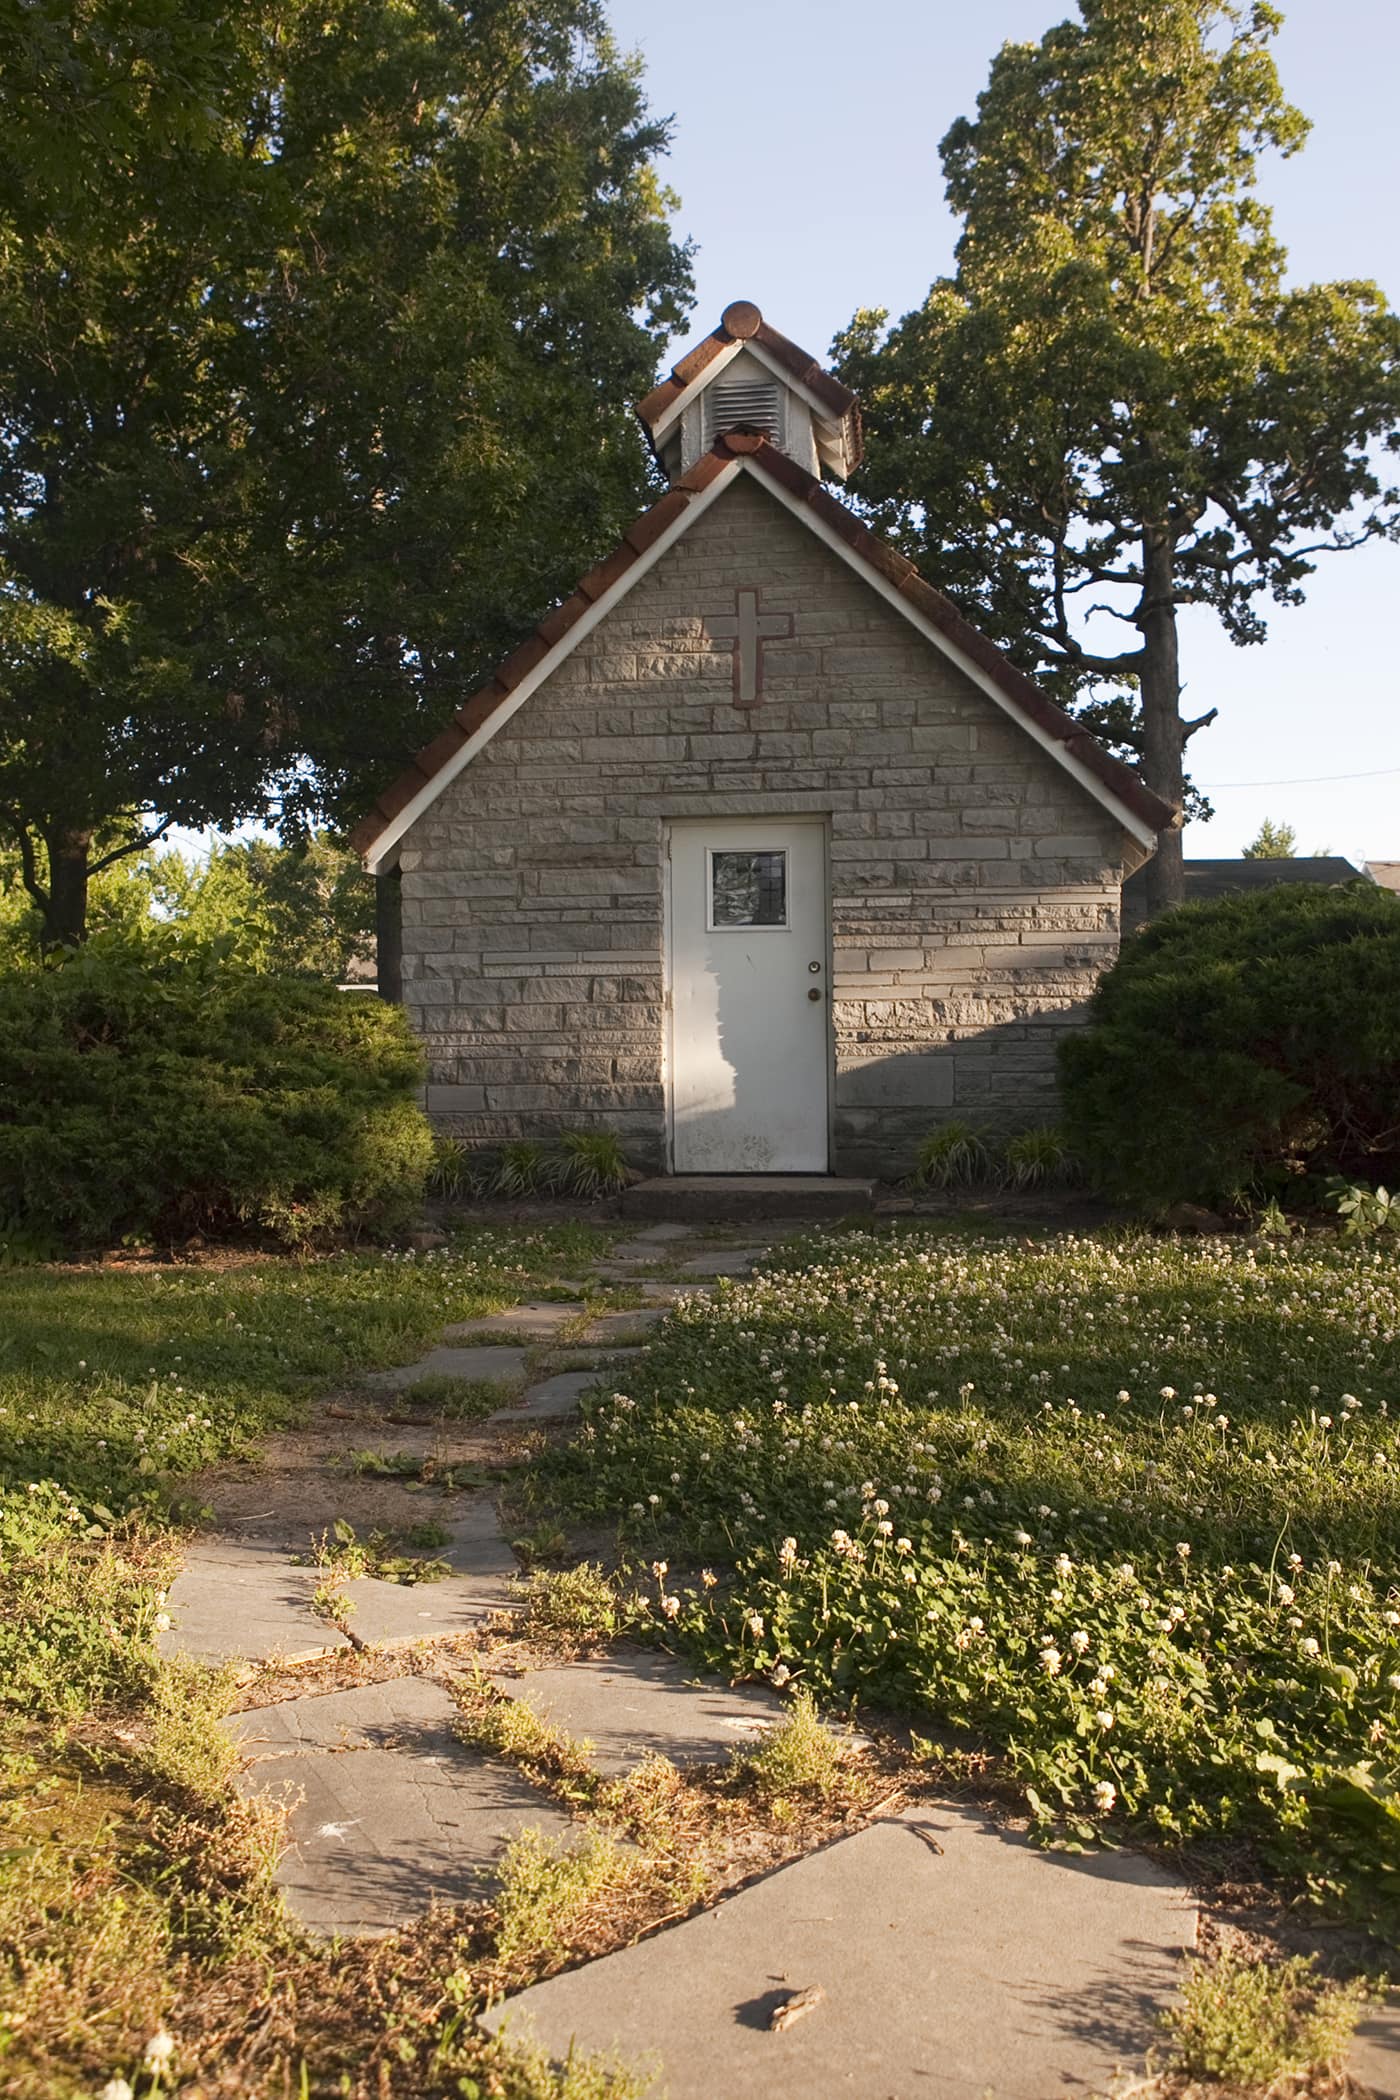 Miniature Church in Golden City, Missouri